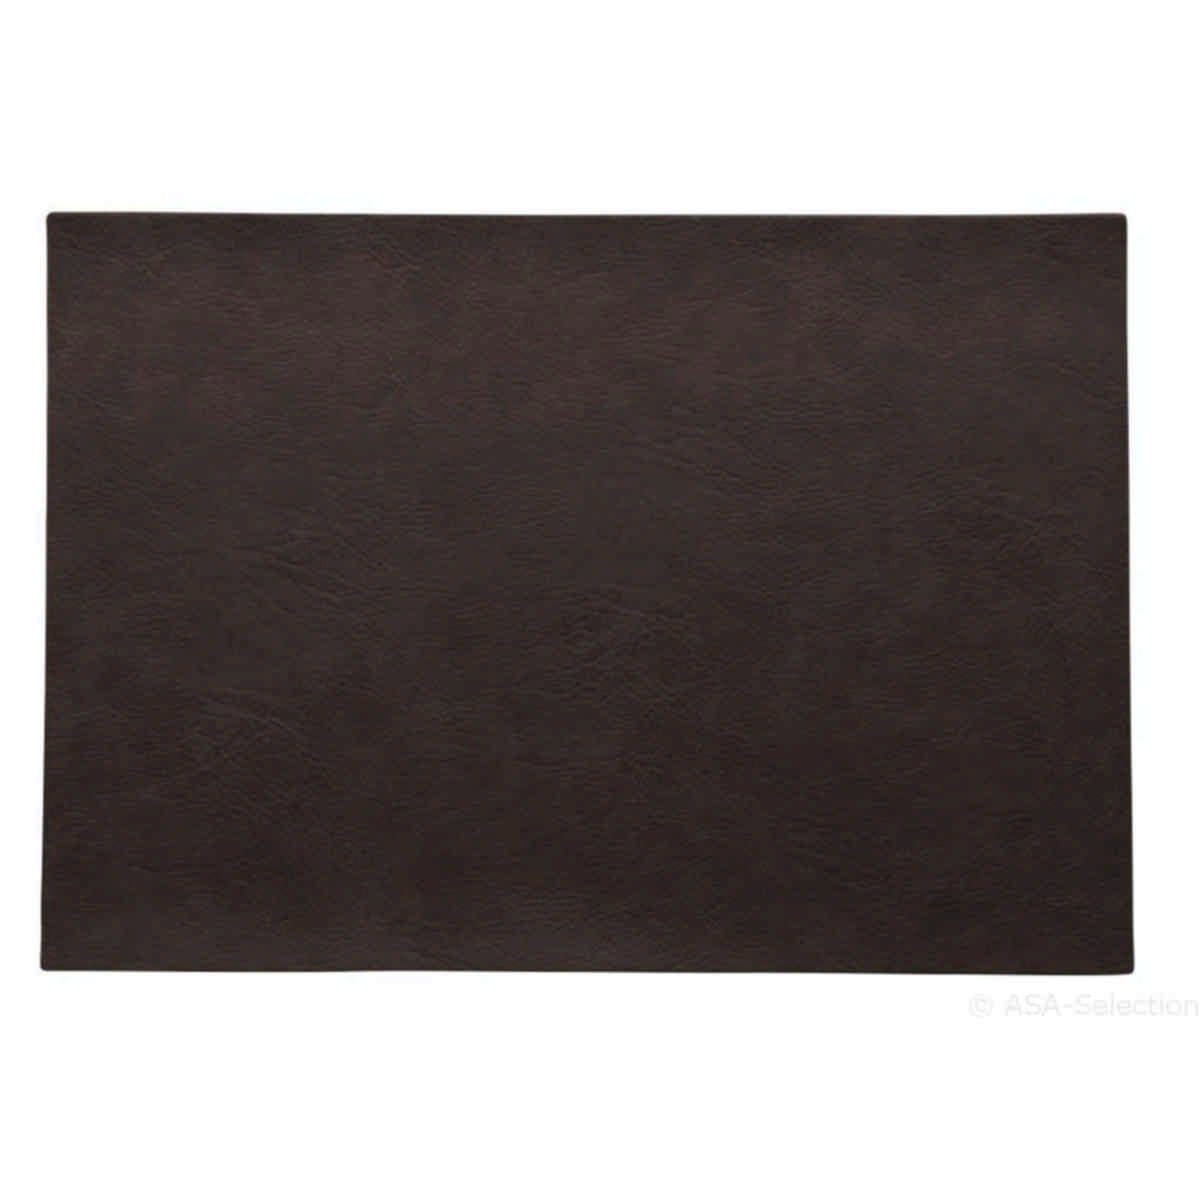 Platzset, Table Tops Vegan Leather, ASA SELECTION, 33x46 cm